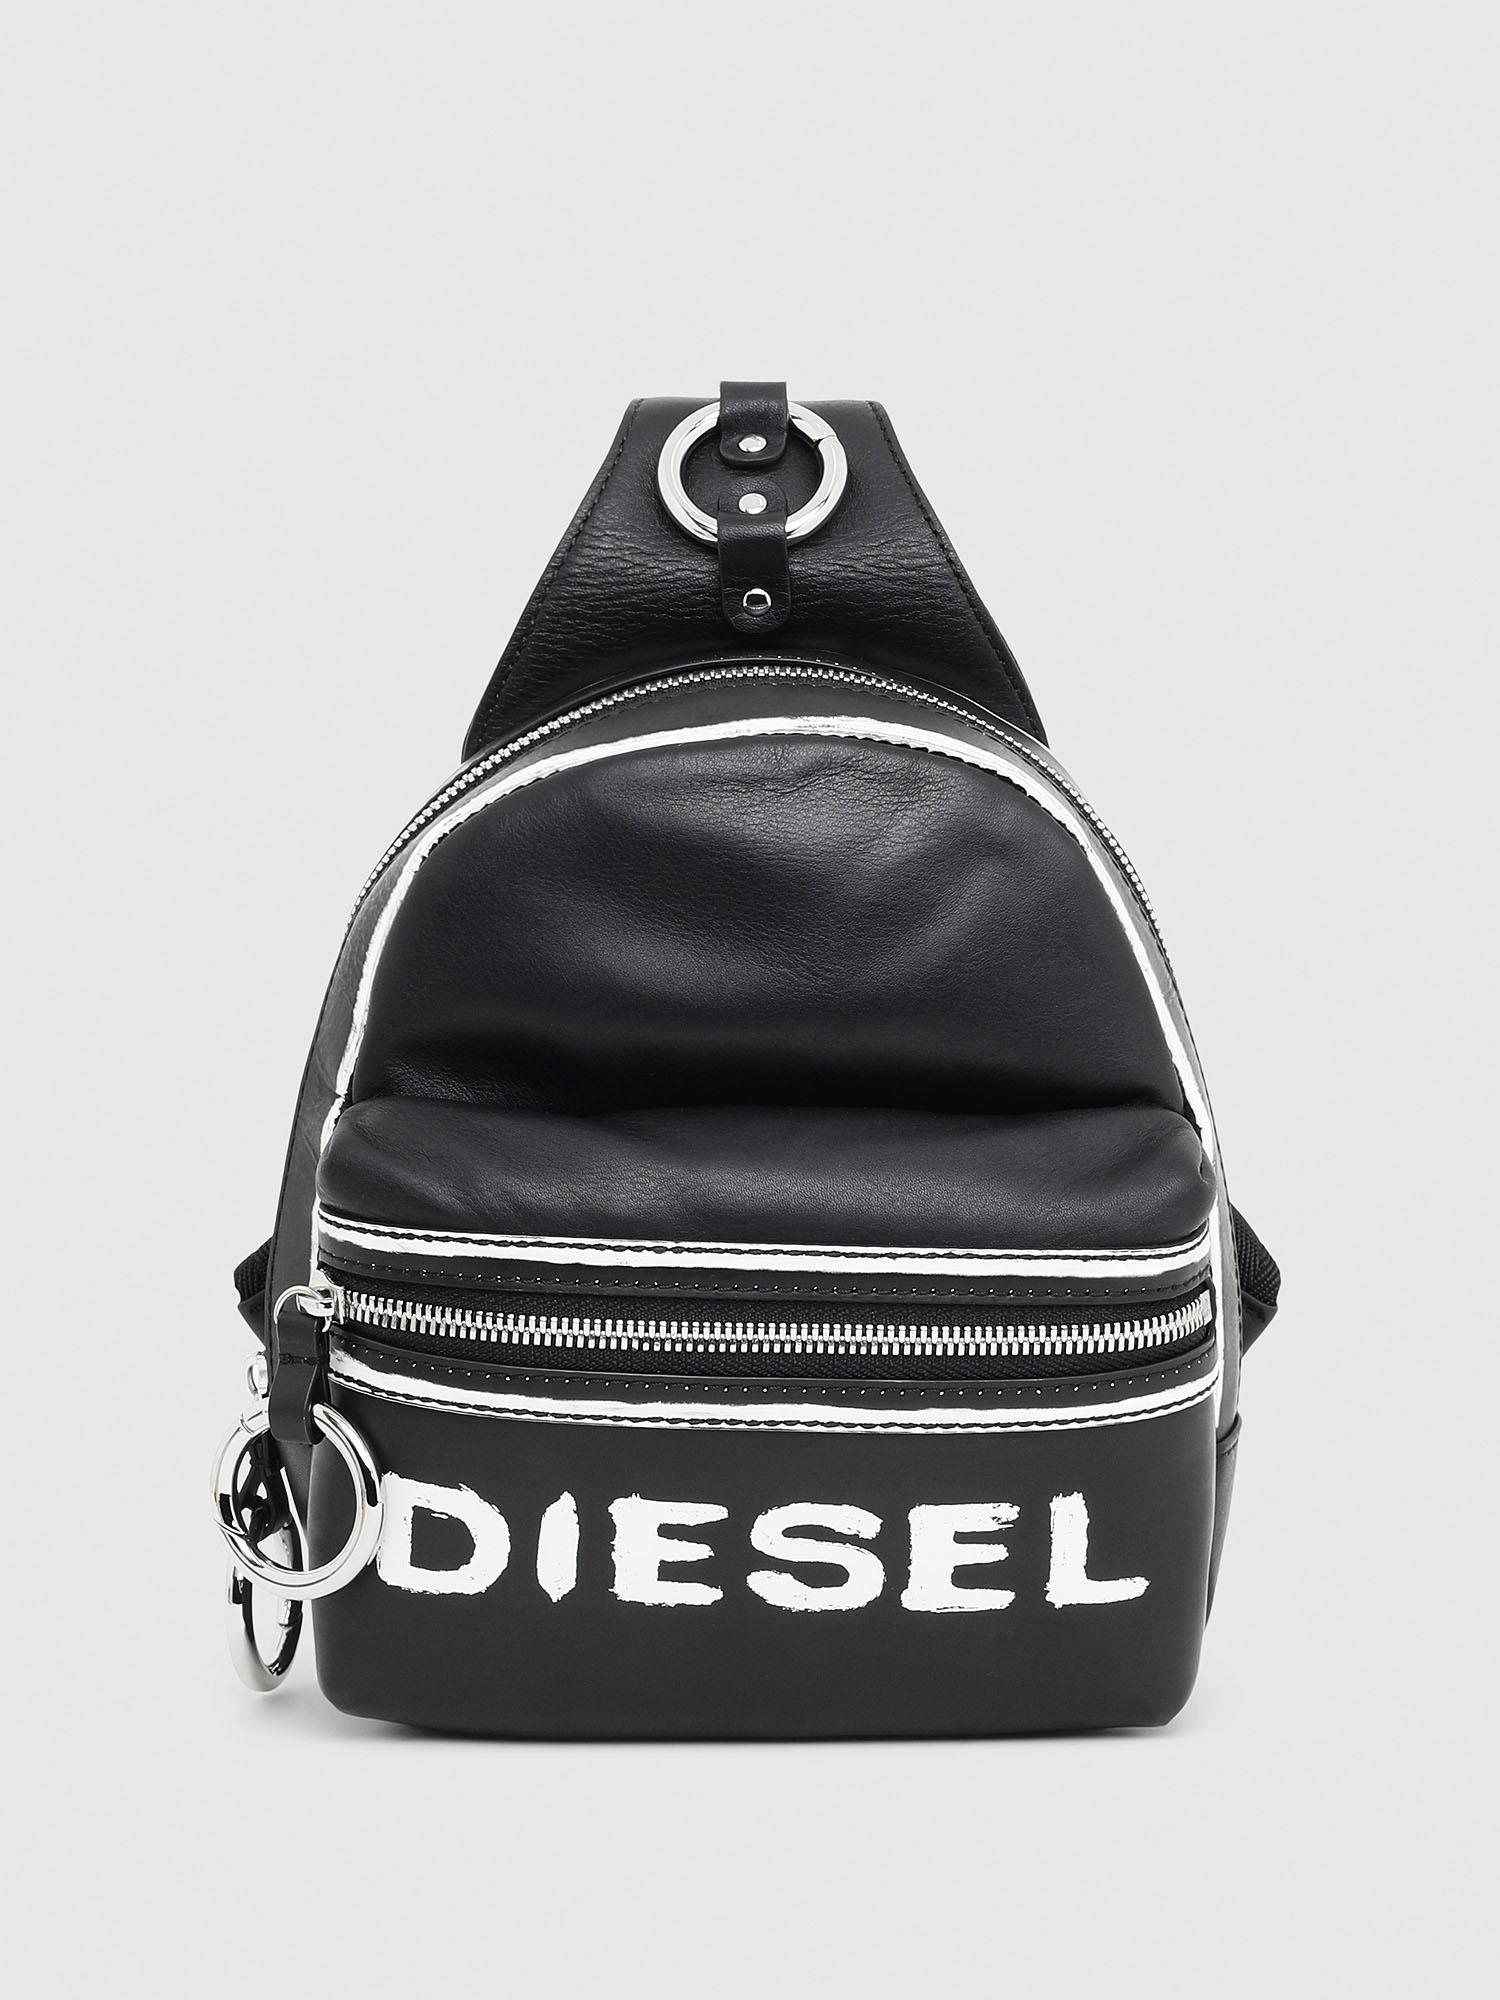 DIESEL Leather Logo Print Mini Backpack in Black - Save 51% - Lyst